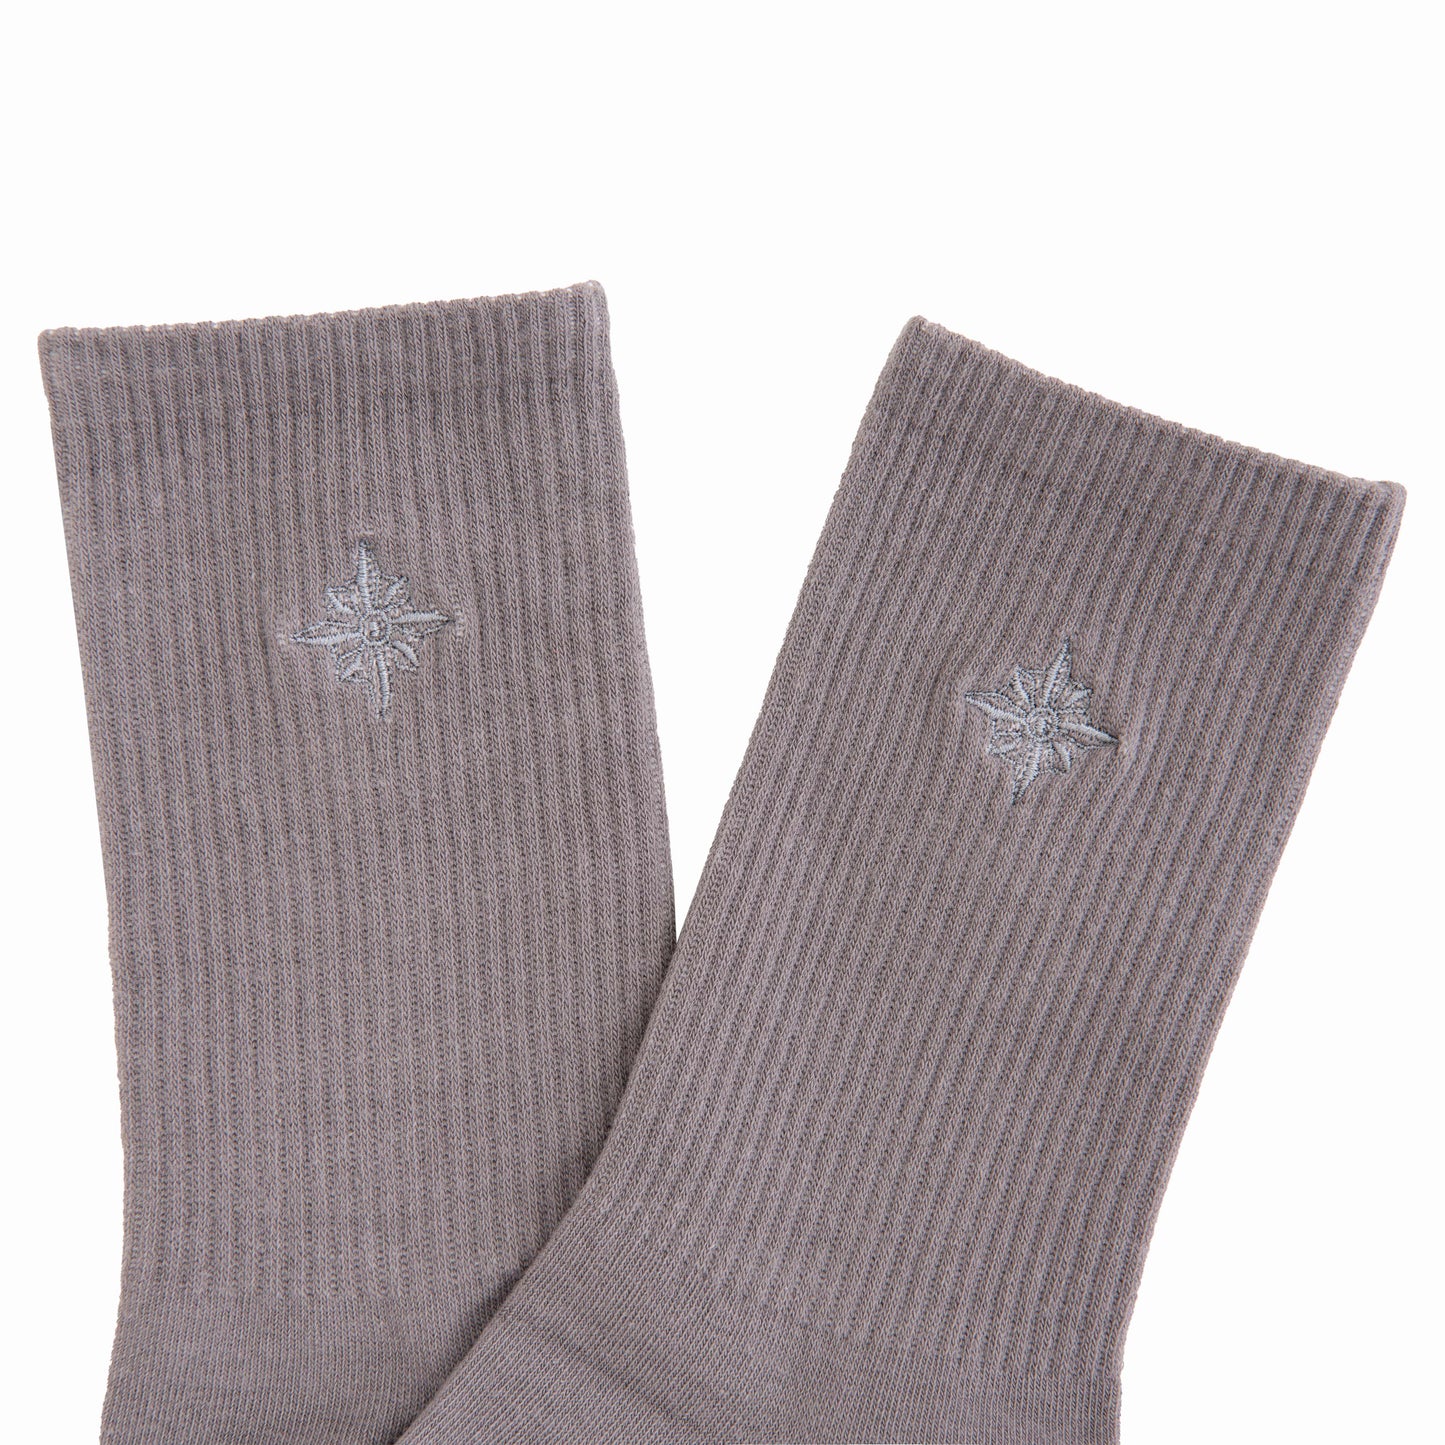 Sock gray